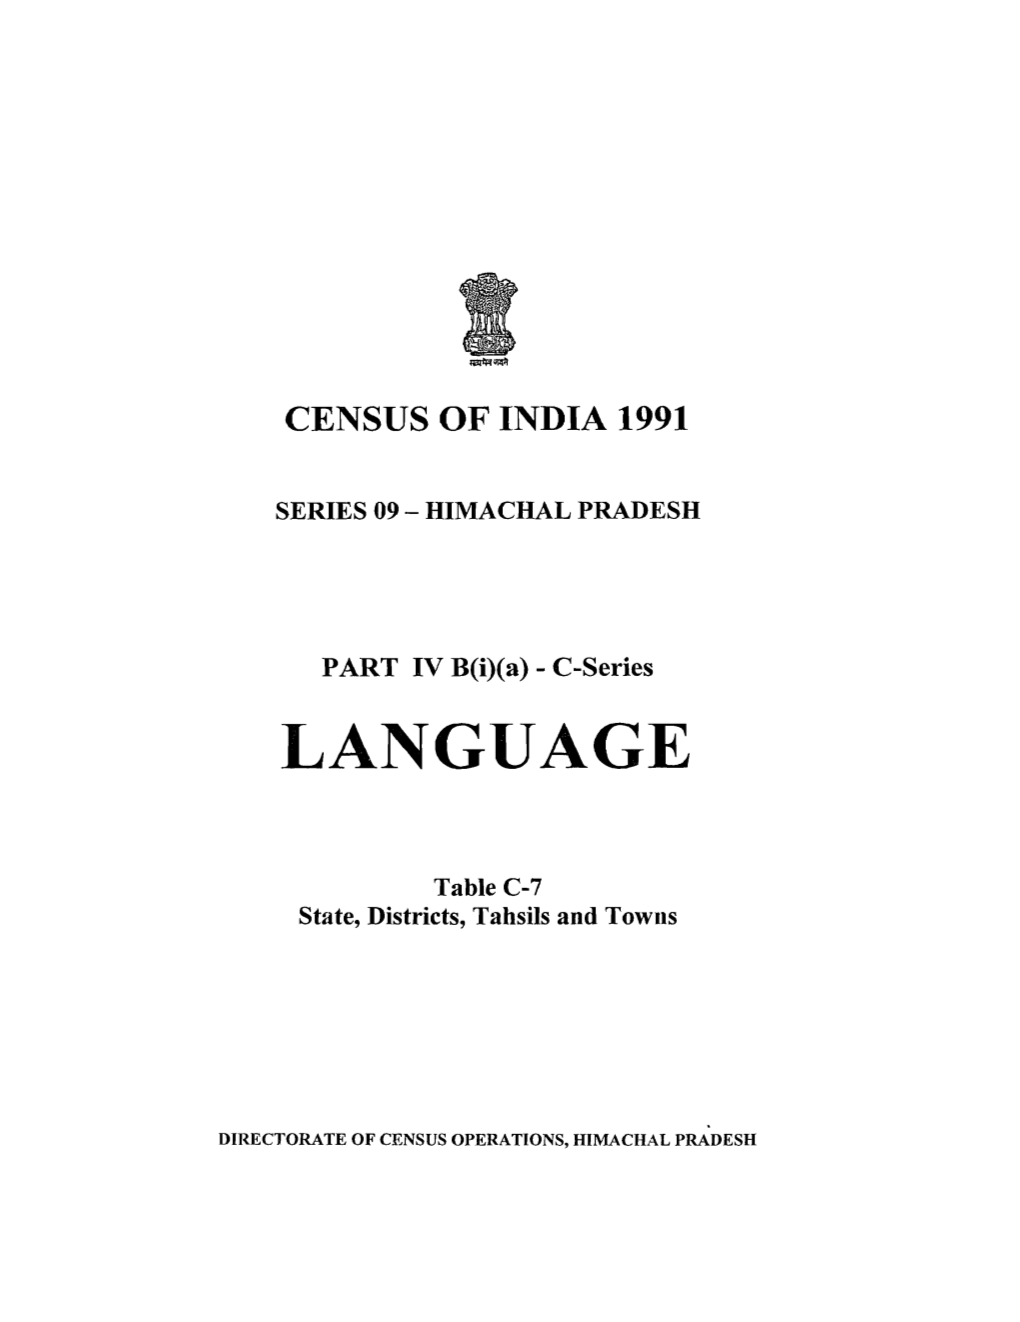 Language, Part IV B(I)(A)-C-Series , Series-9